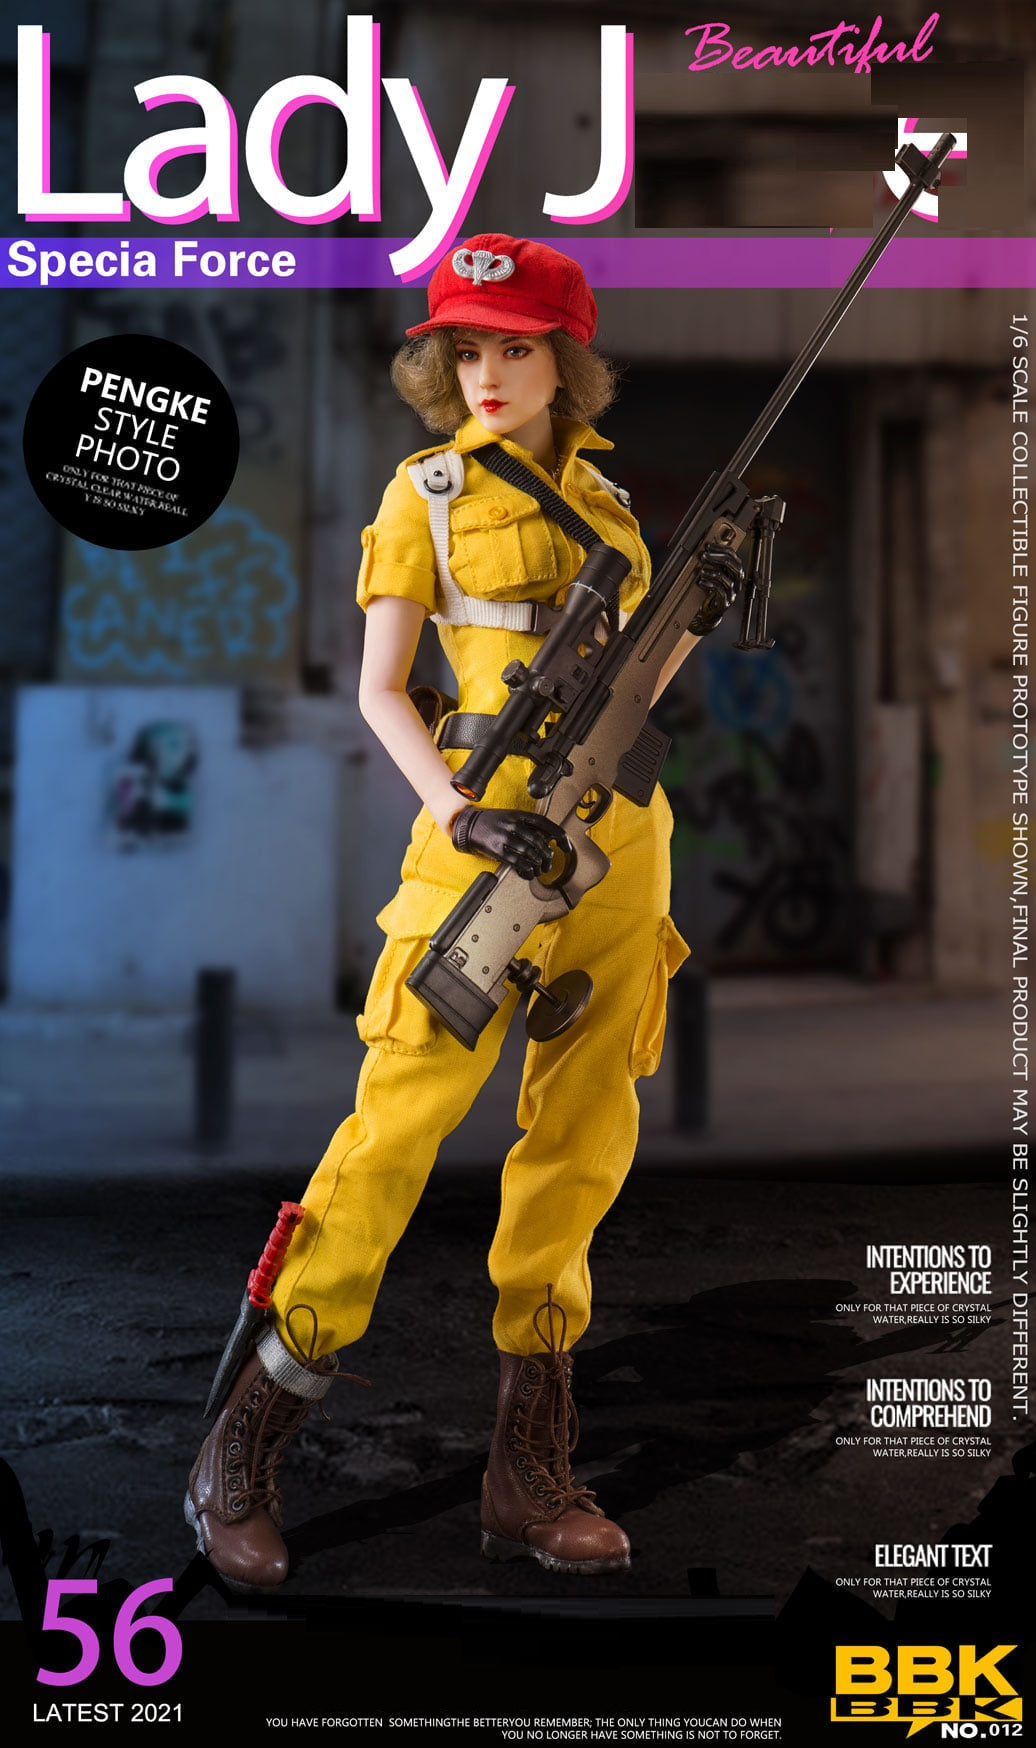 Pedido Figura Lady J - Special Force marca BBK BBK012 escala 1/6